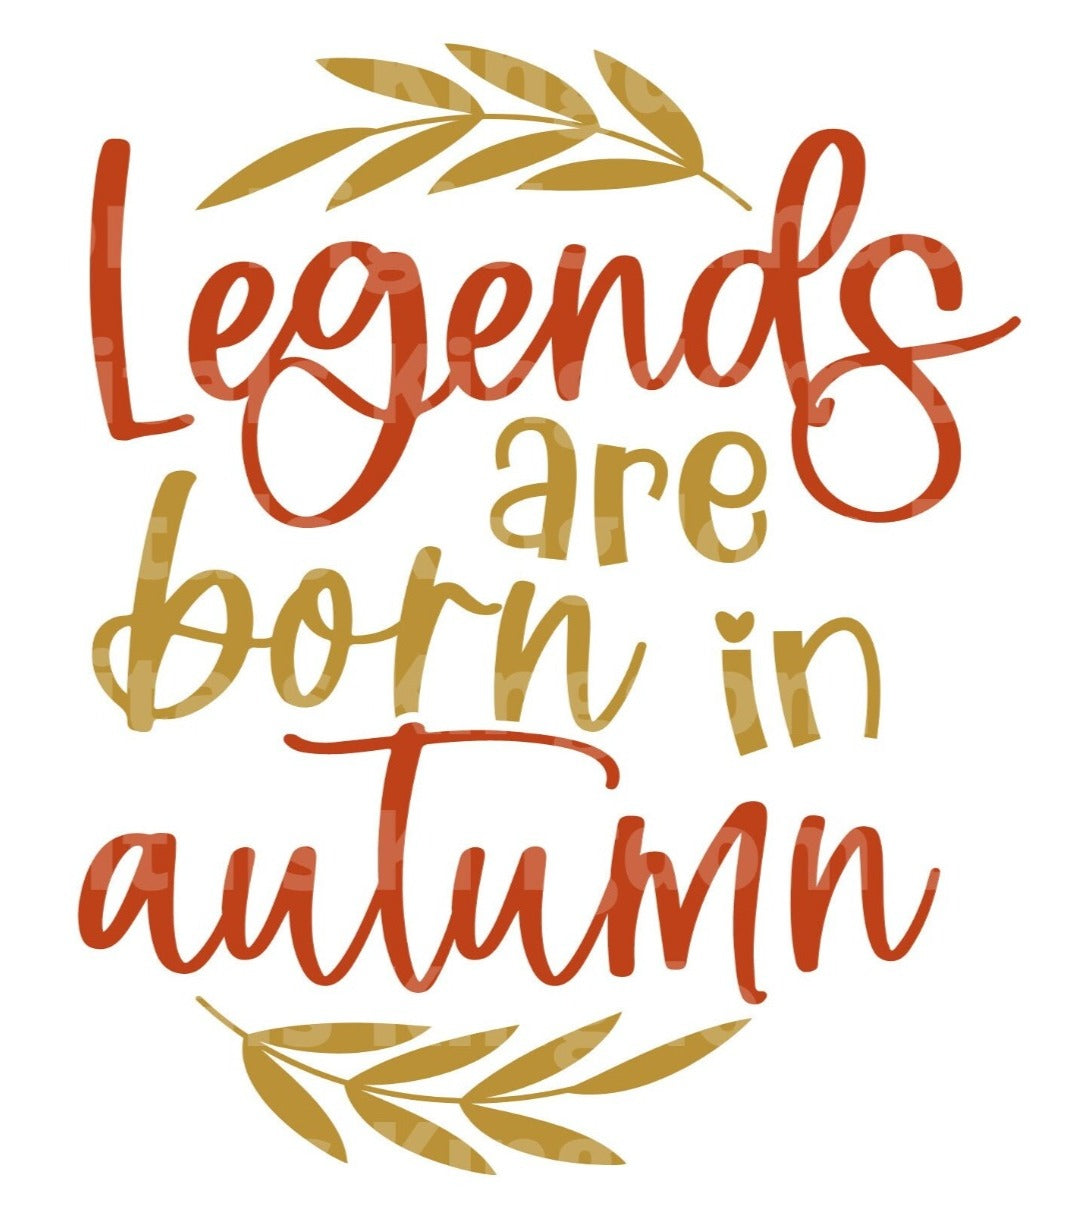 Legends are born in Autumn SVG Cut File